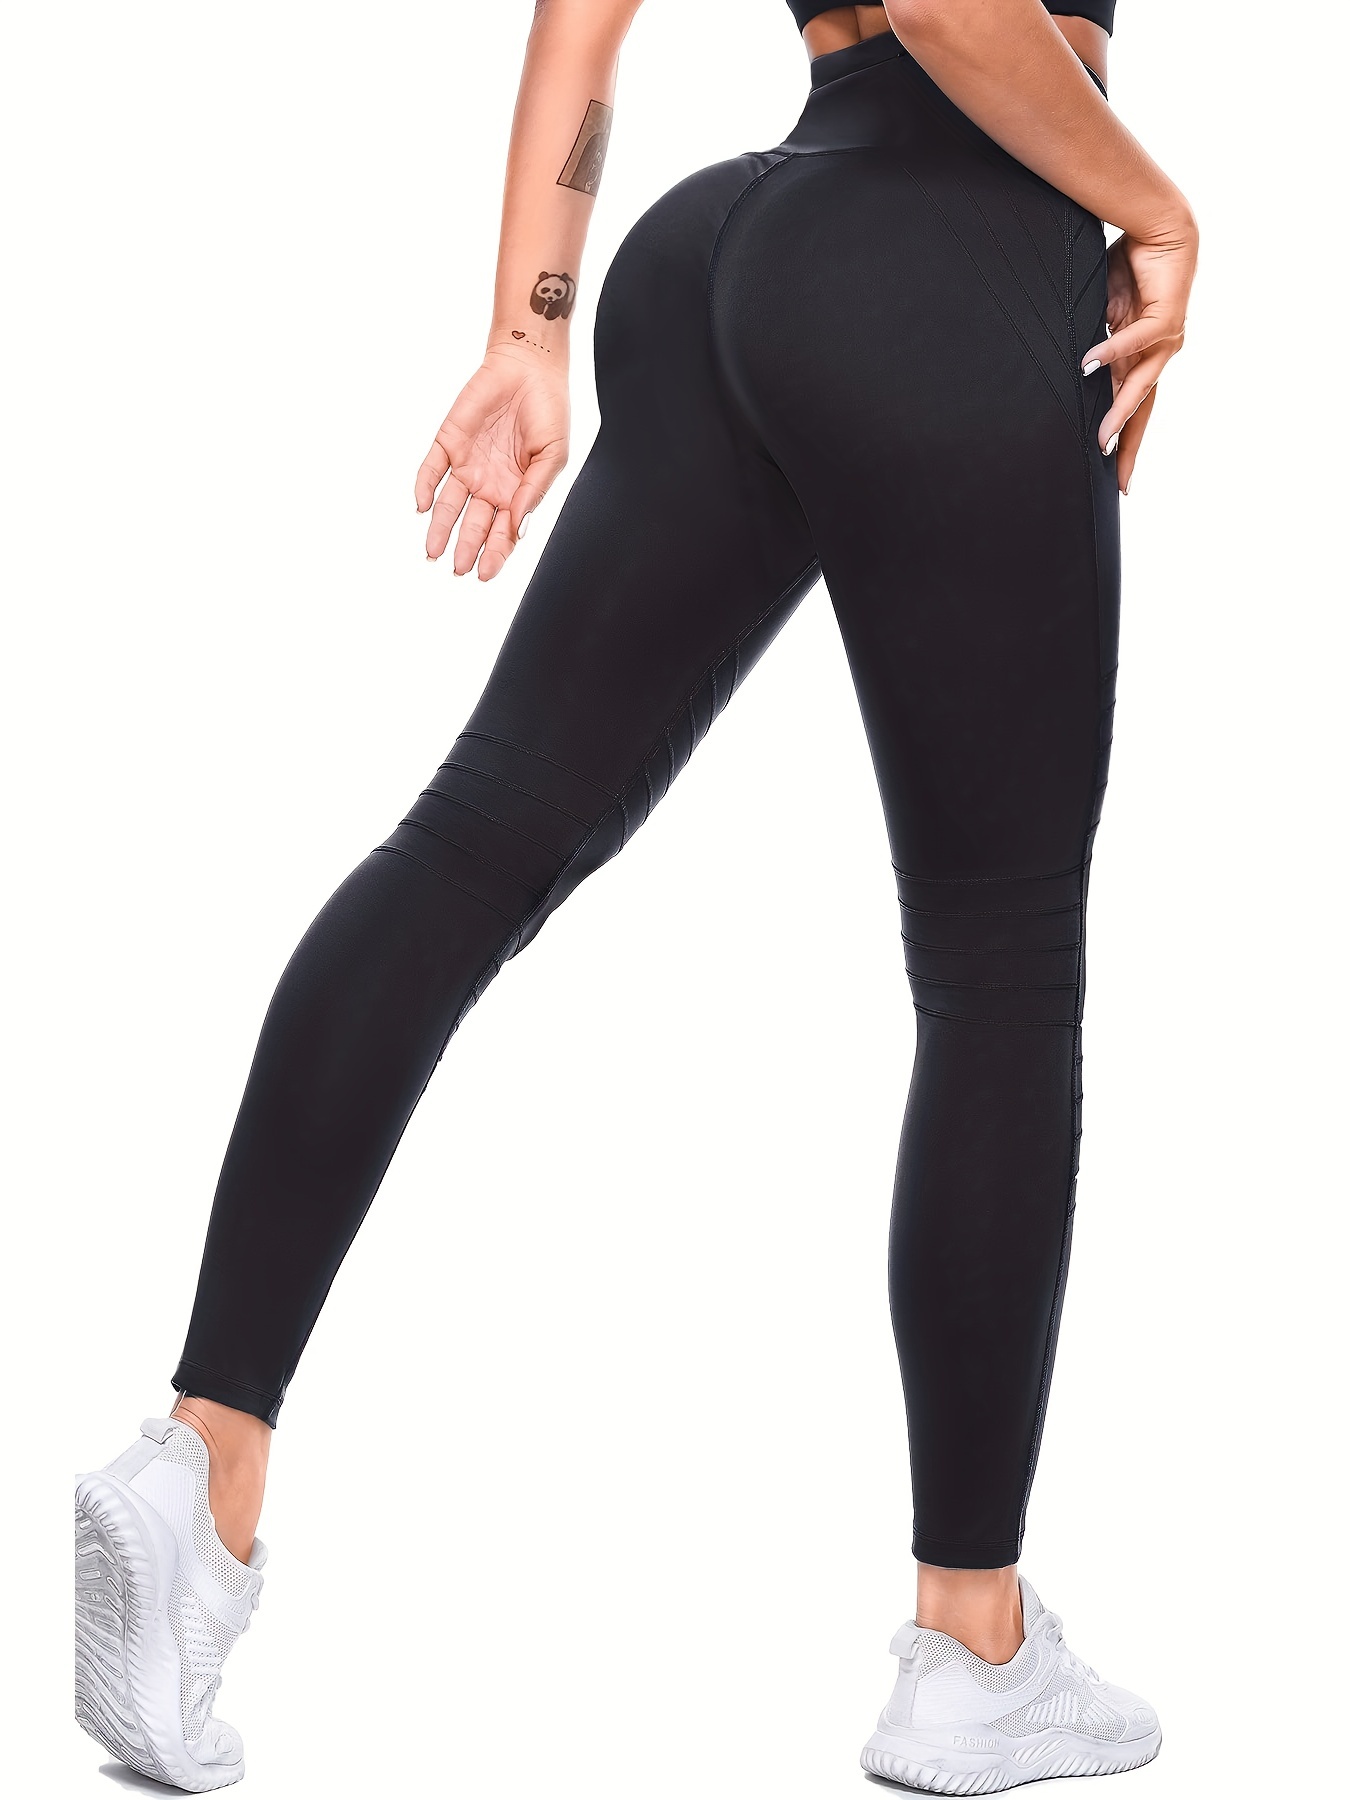 Black Workout Leggings with Back Pockets - Women's Yoga Pants